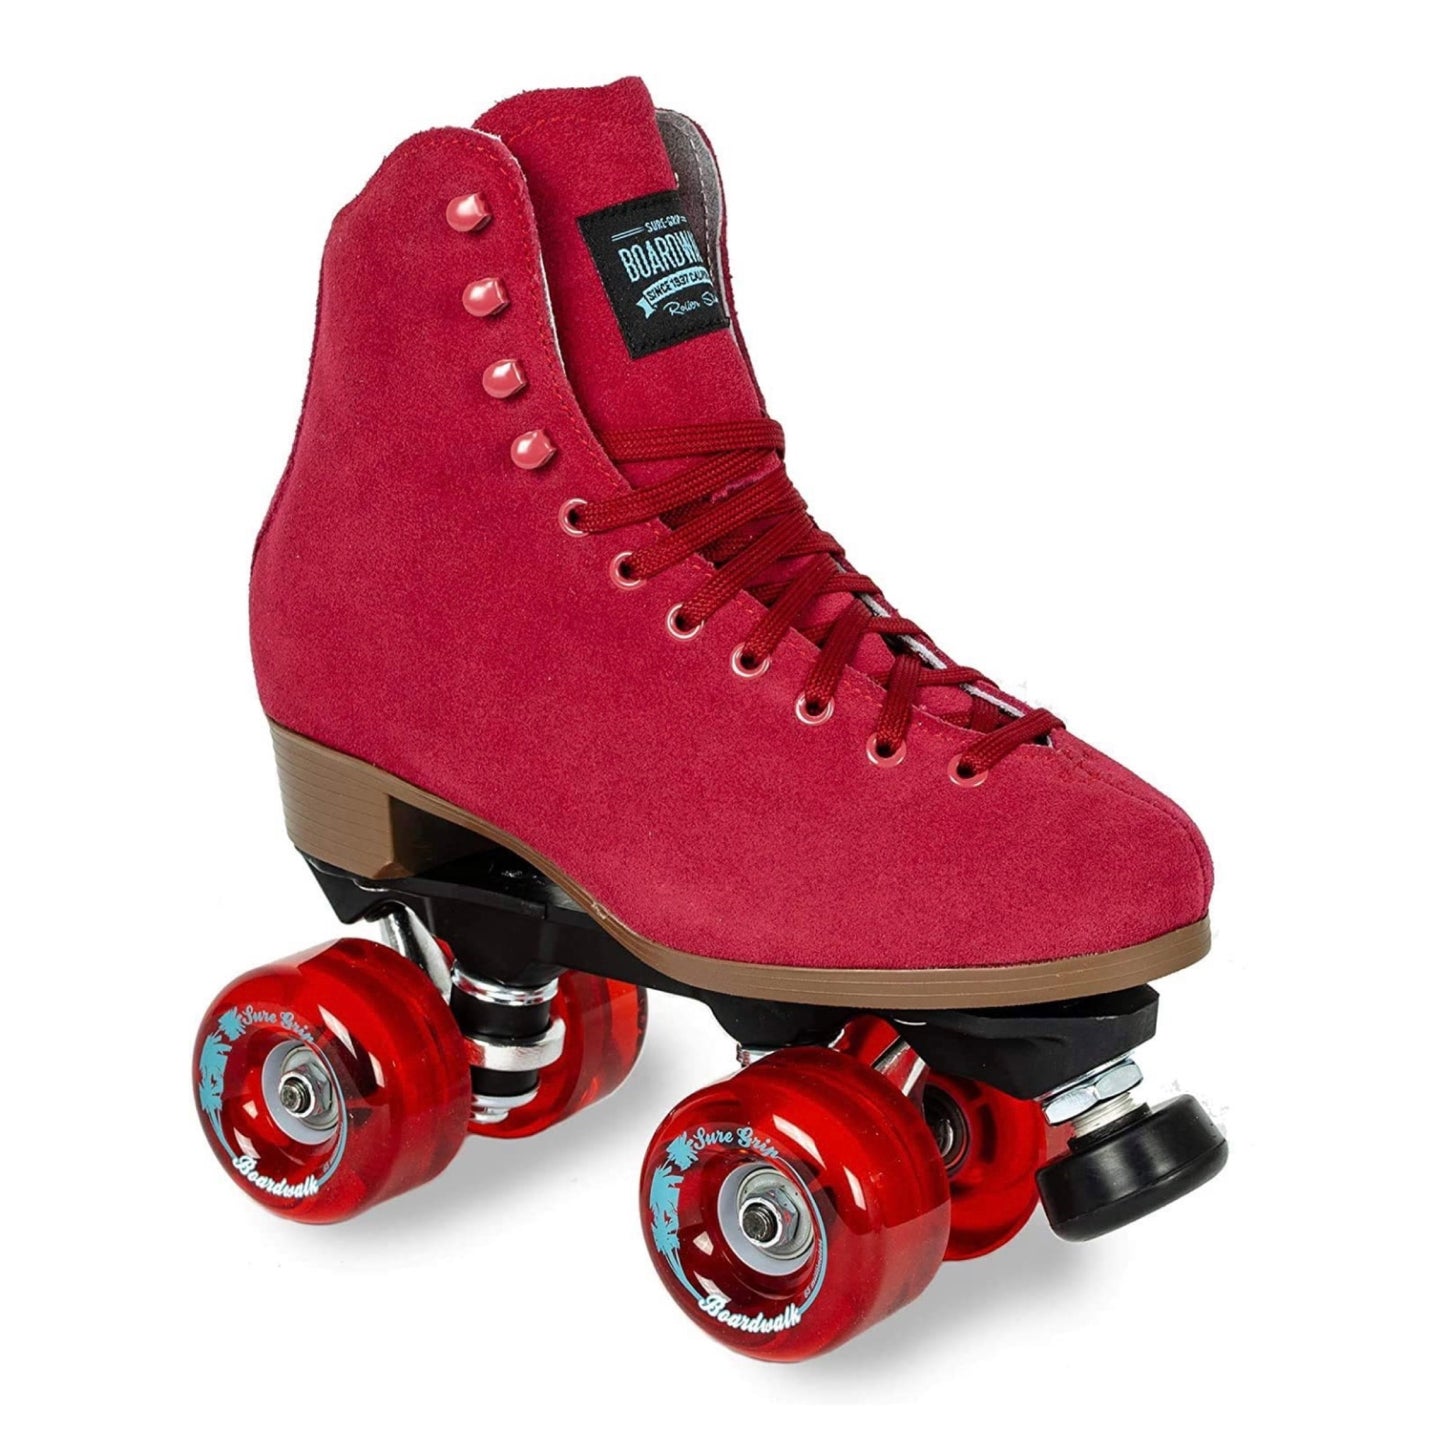 Sure-Grip Boardwalk Red Outdoor Roller Skates